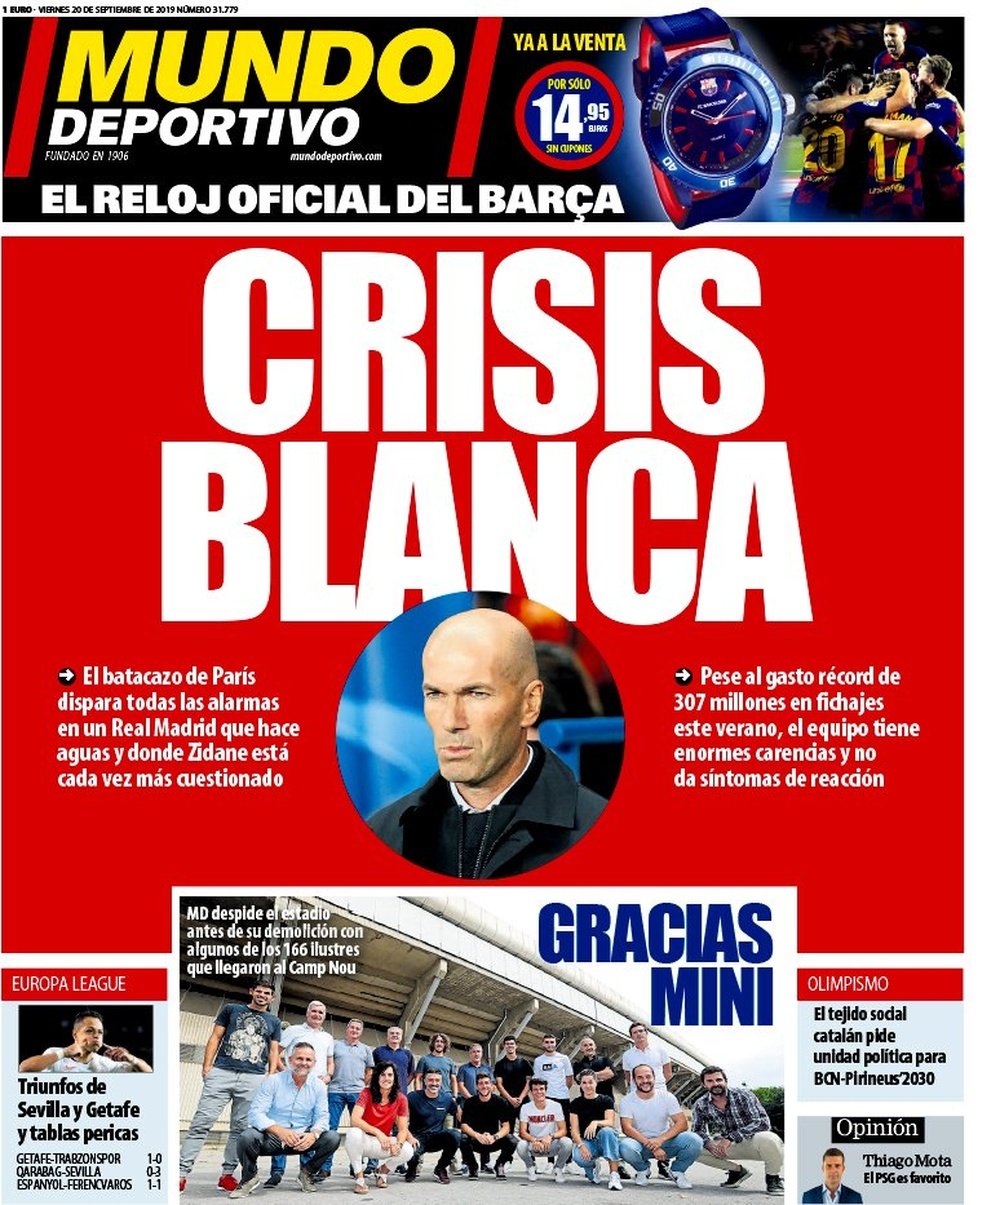 Capa do jornal Mundo Deportivo de 20-09-2019. MundoDeportivo